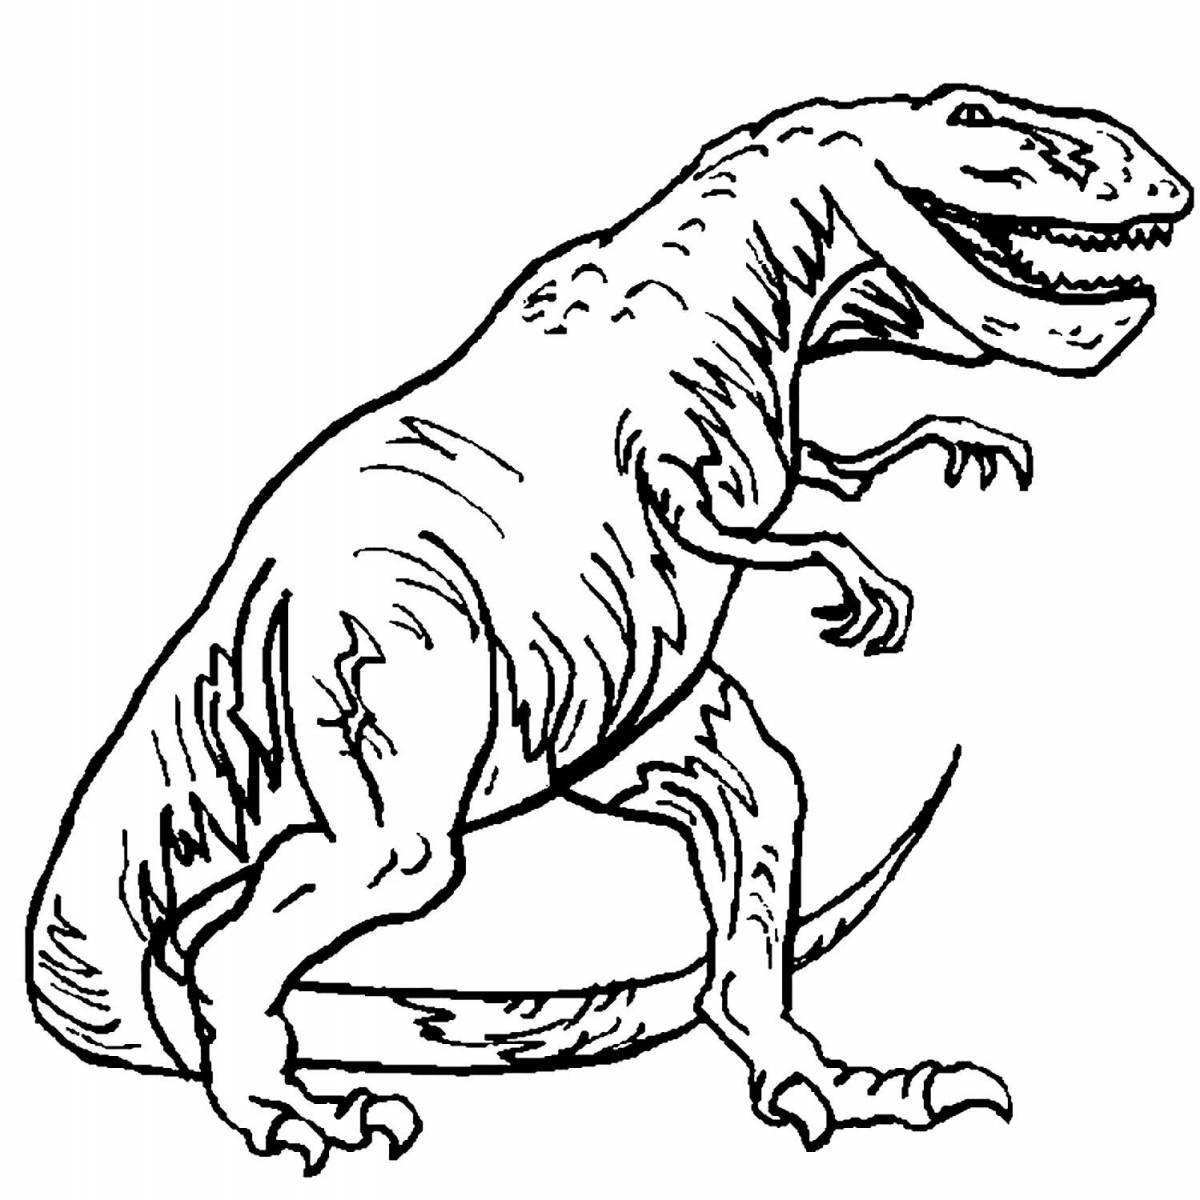 Coloring page elegant tyrannosaurus seal